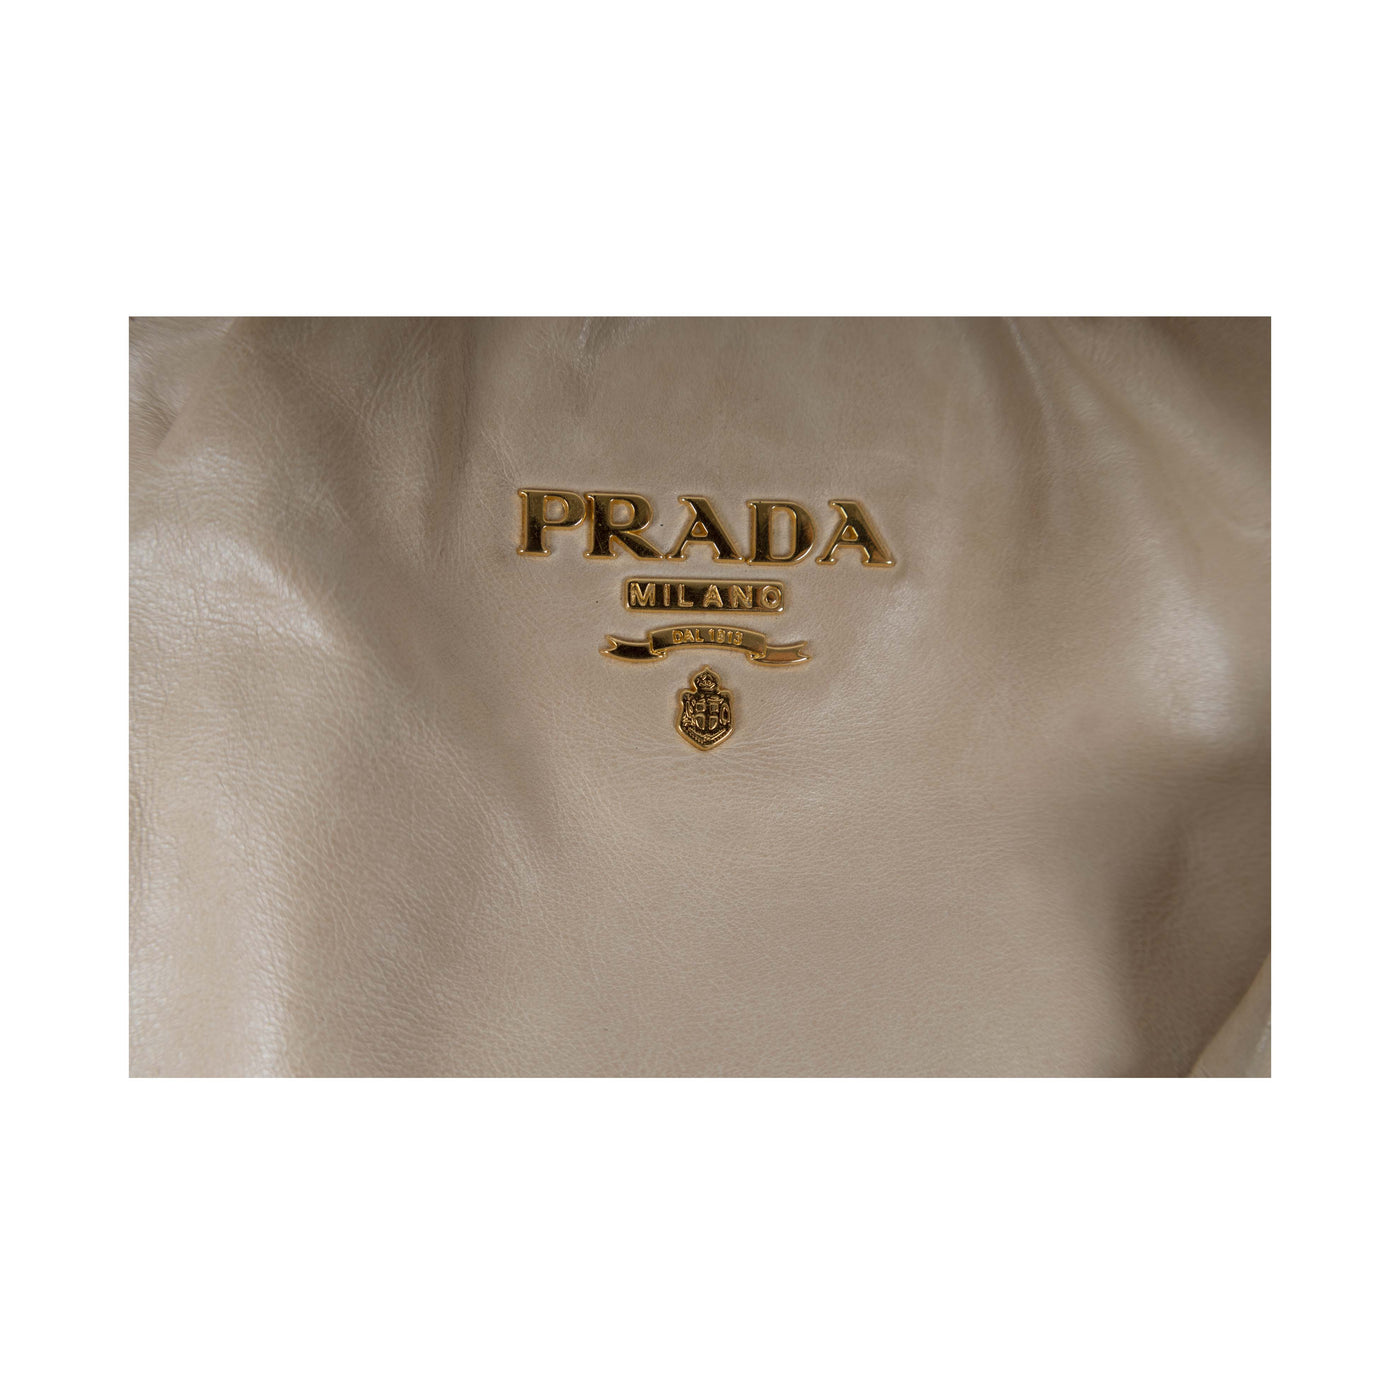 Secondhand Prada Beige Leather Hobo Handbag with Strap